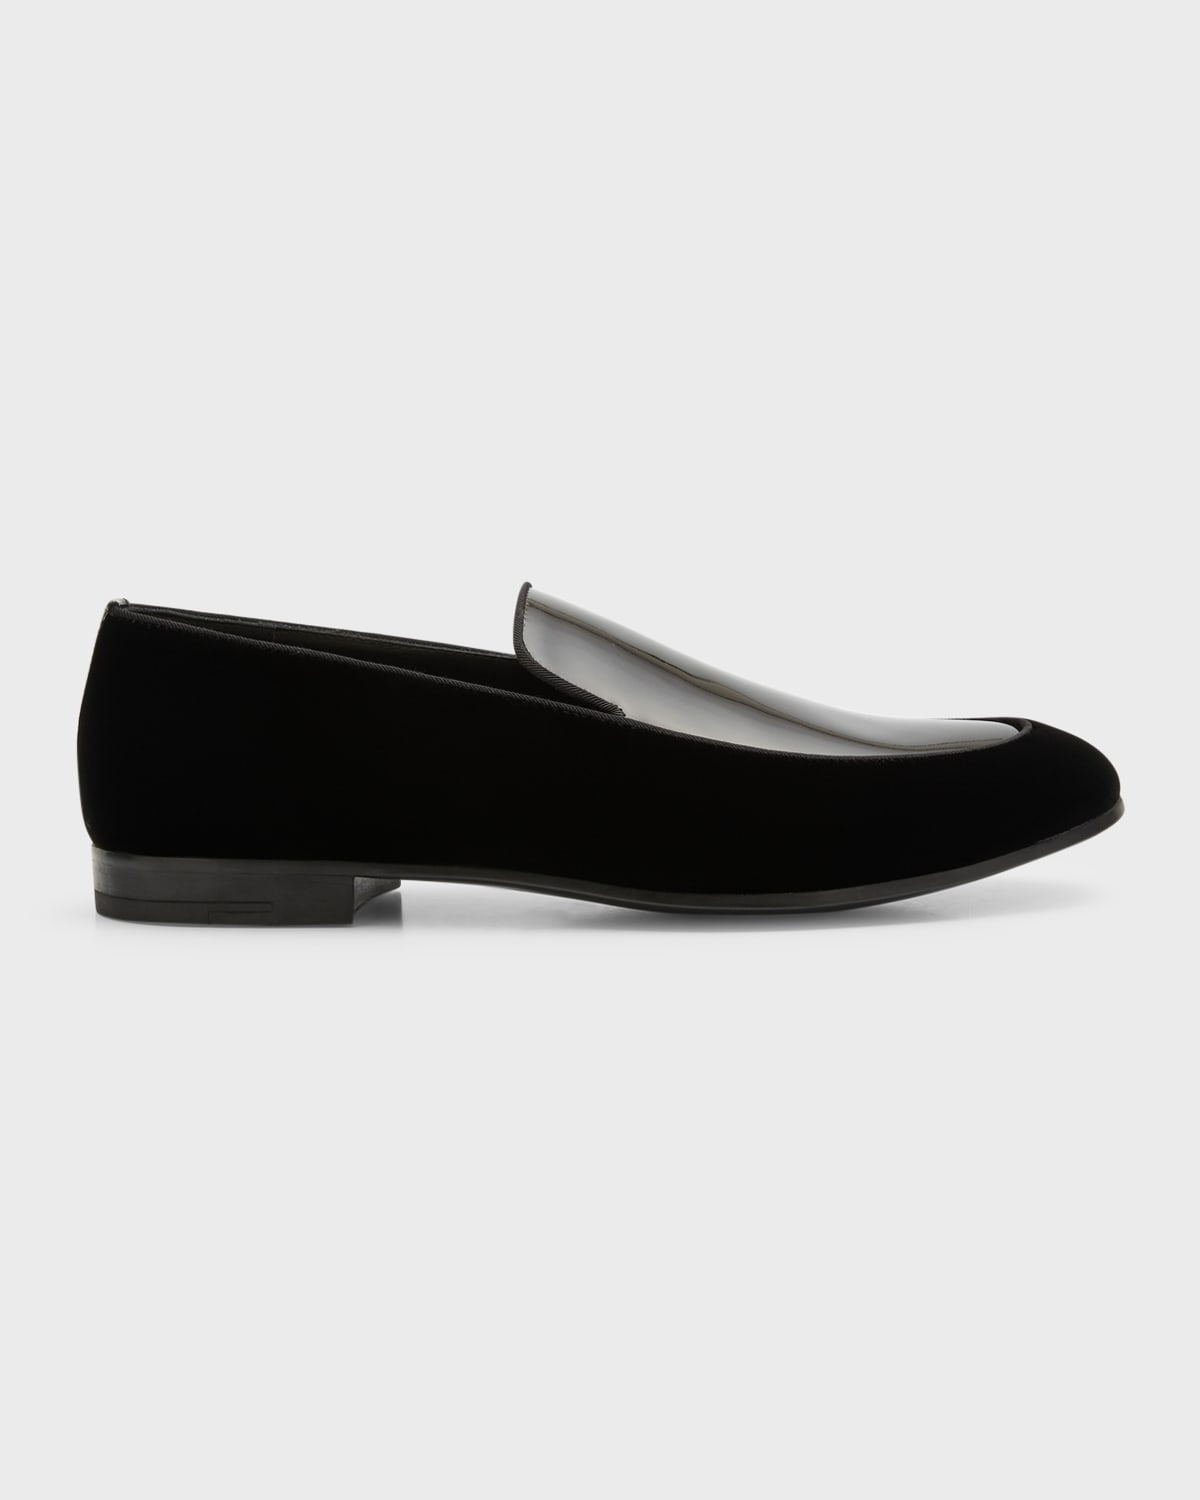 Giorgio Armani Men's Velvet Patent Leather Formal Loafers In Solid Black